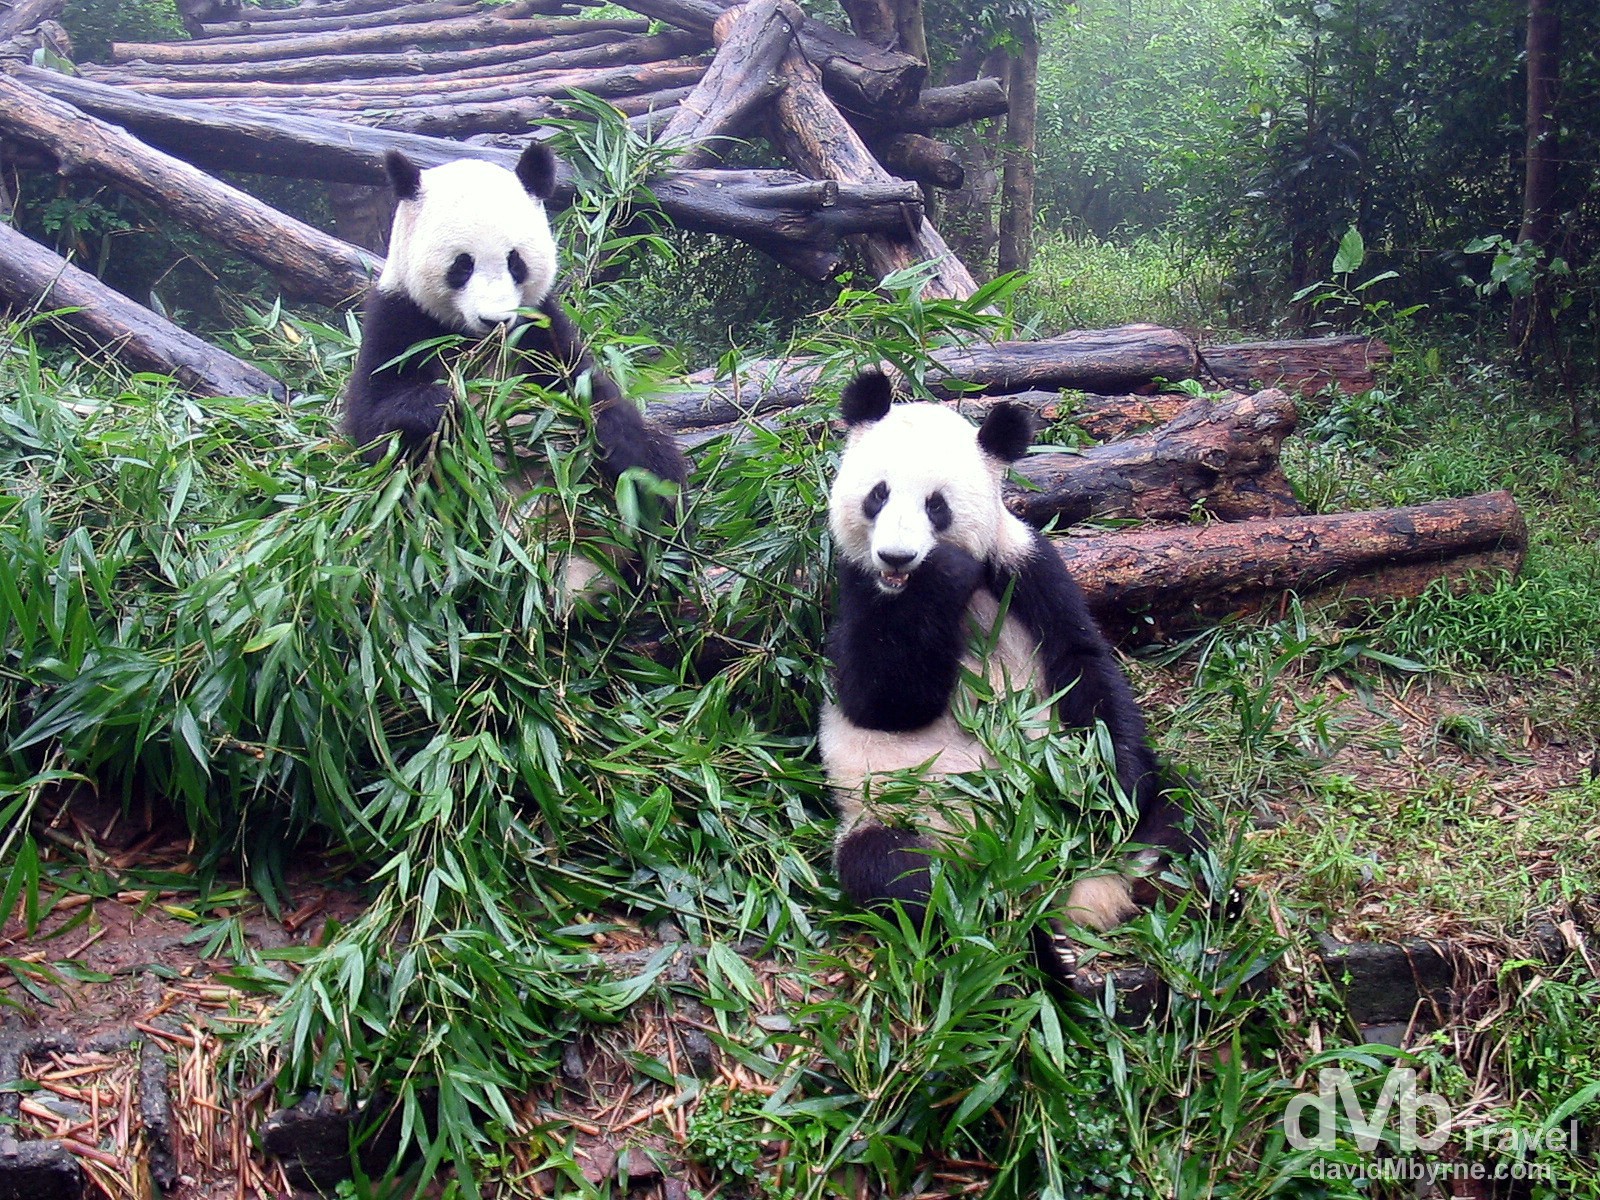 Pandas feeding at the Panda Breeding Centre in Chengdu, Sichuan Province, China. September 24th 2004.